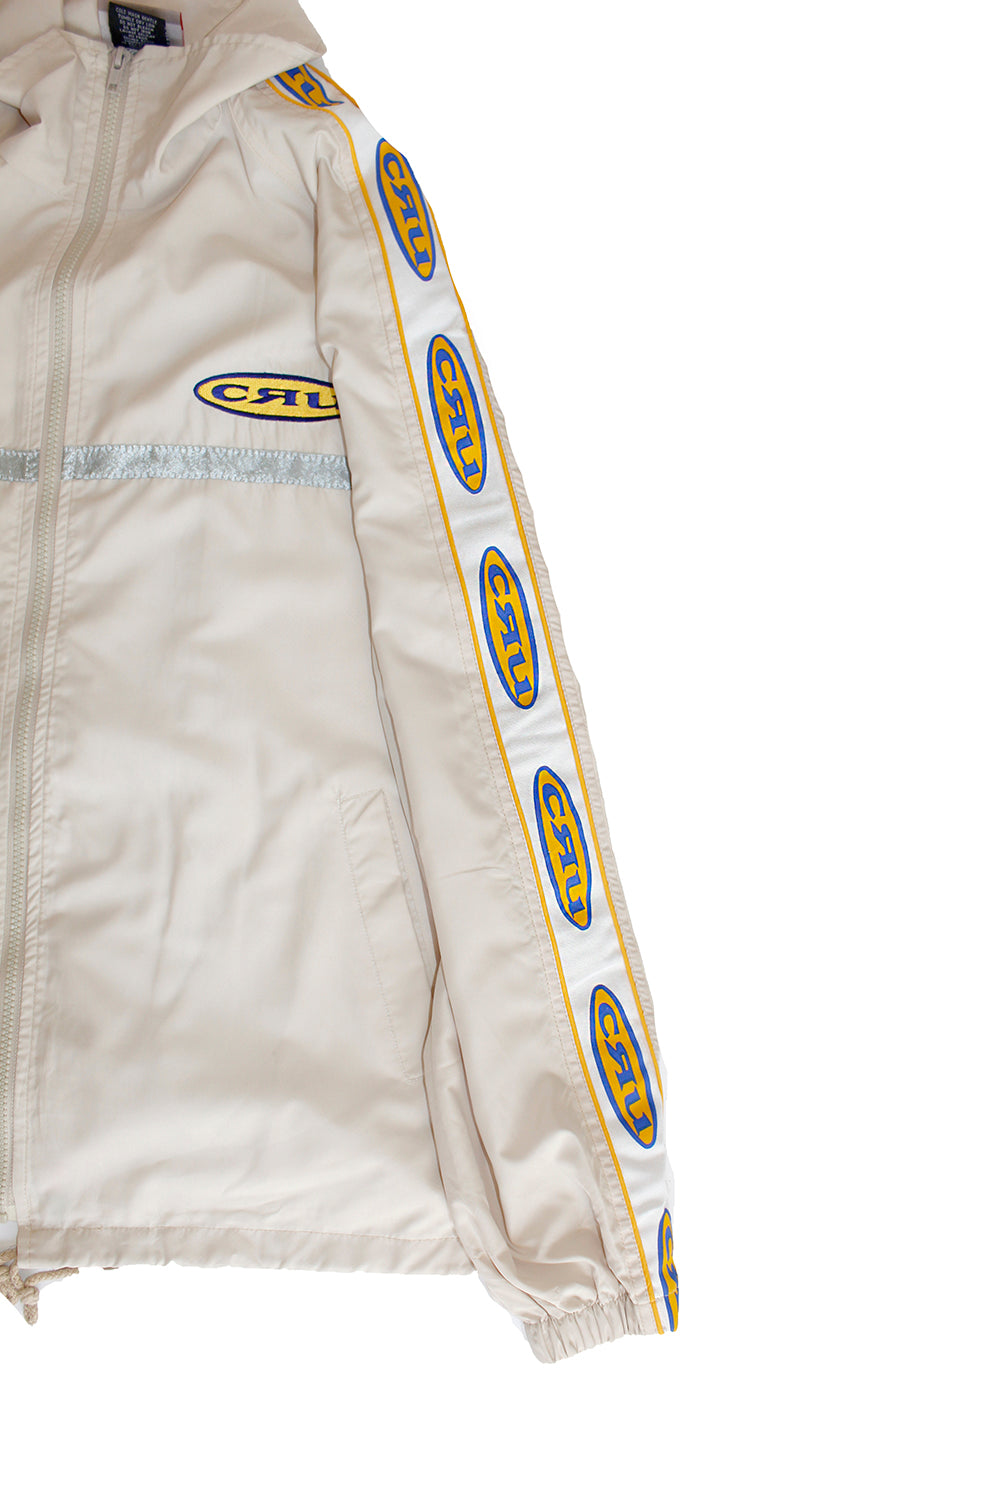 Vintage 90&#39;s CRU Designs Jacket ///SOLD///